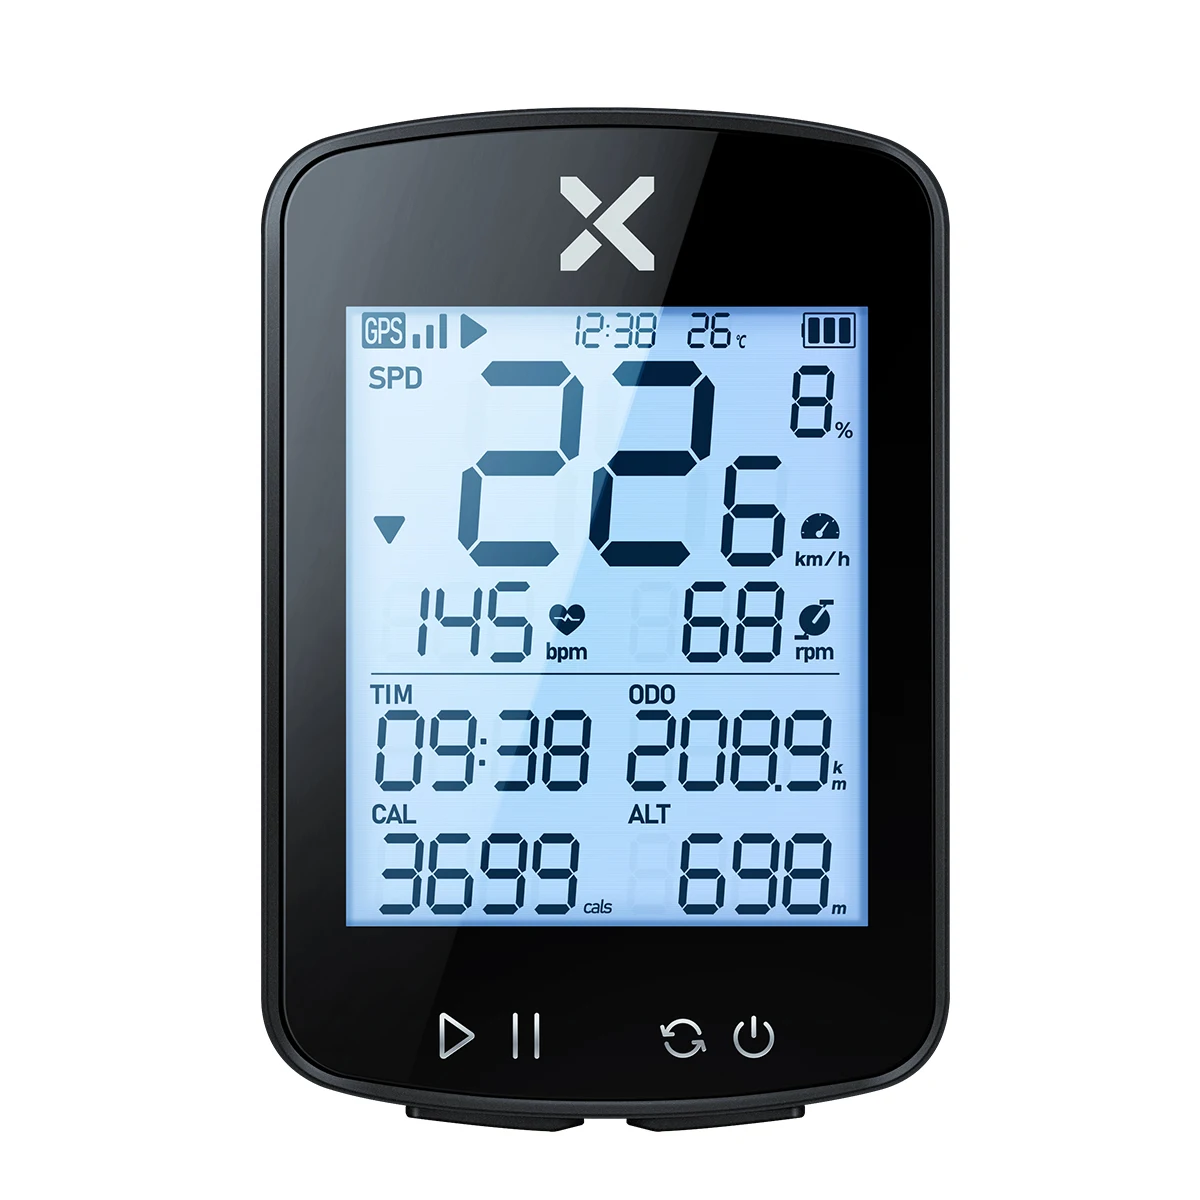 XOSS GPS Cycling Computer G2 Plus Wireless Speedometer Bluetooth Tracker Waterproof Road Bike MTB Bicycle Odometer New XossG images - 6